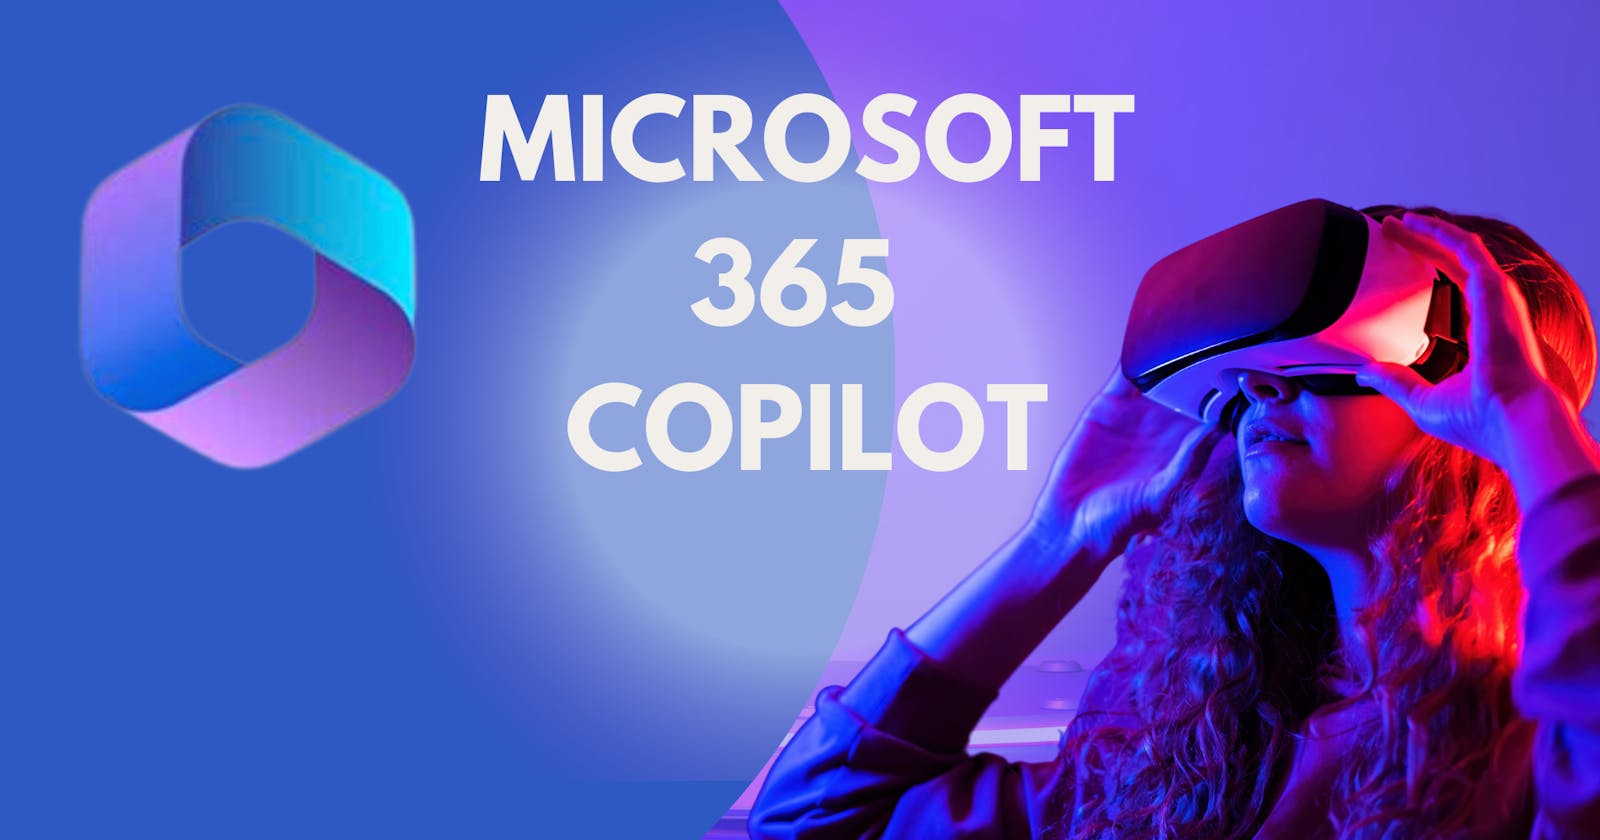 What is Microsoft 365 Copilot?